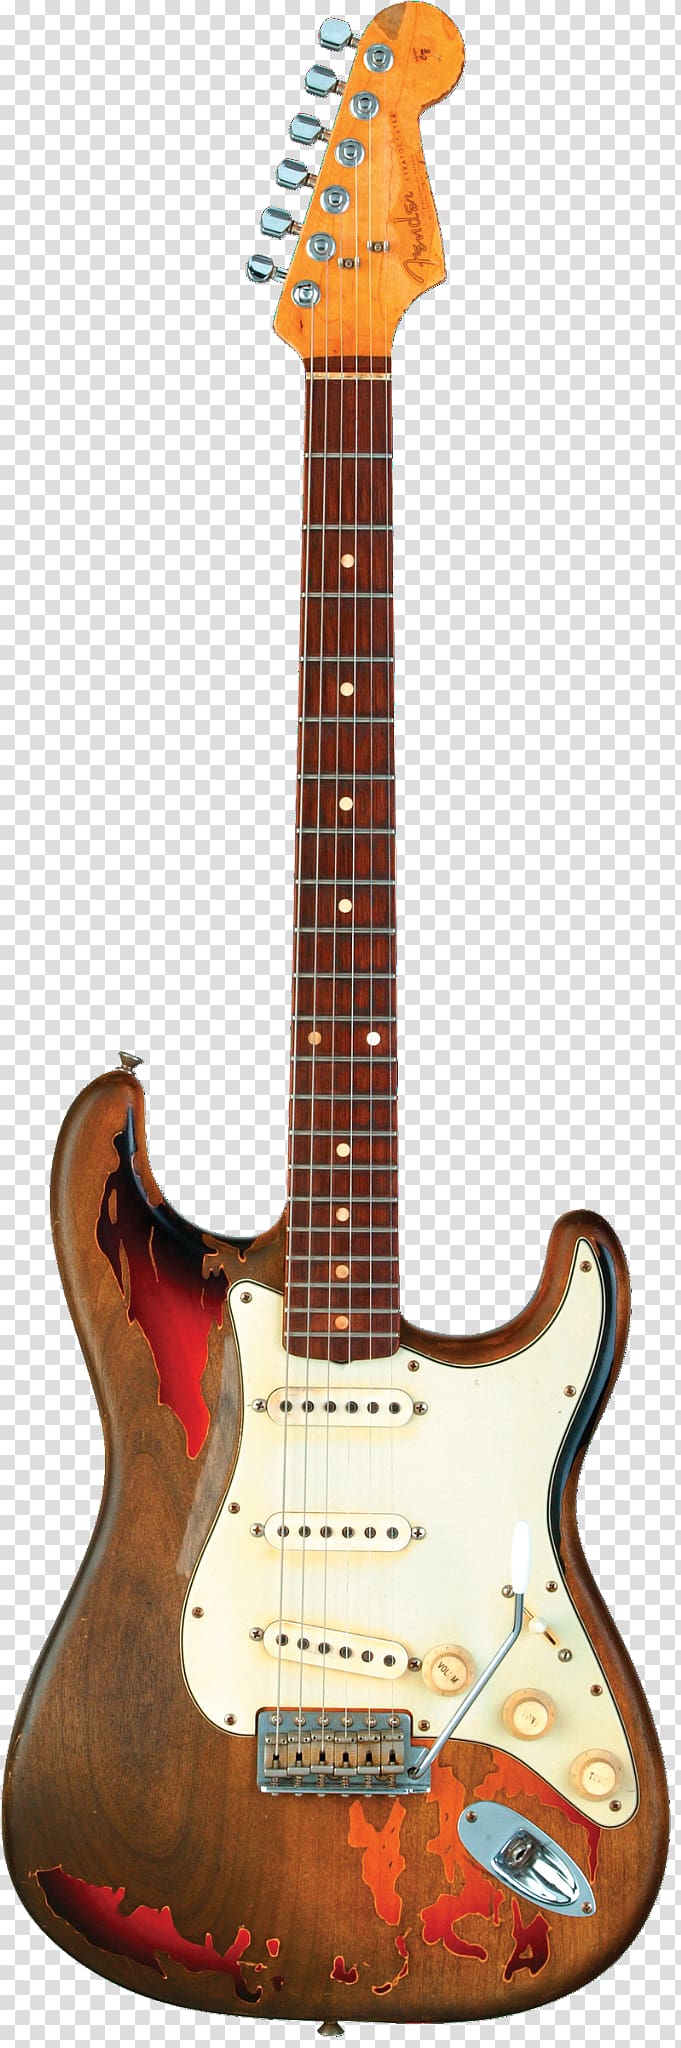 Fender Stratocaster Fender Musical Instruments Corporation Electric guitar Sunburst, stagg electric guitar sunburst transparent background PNG clipart